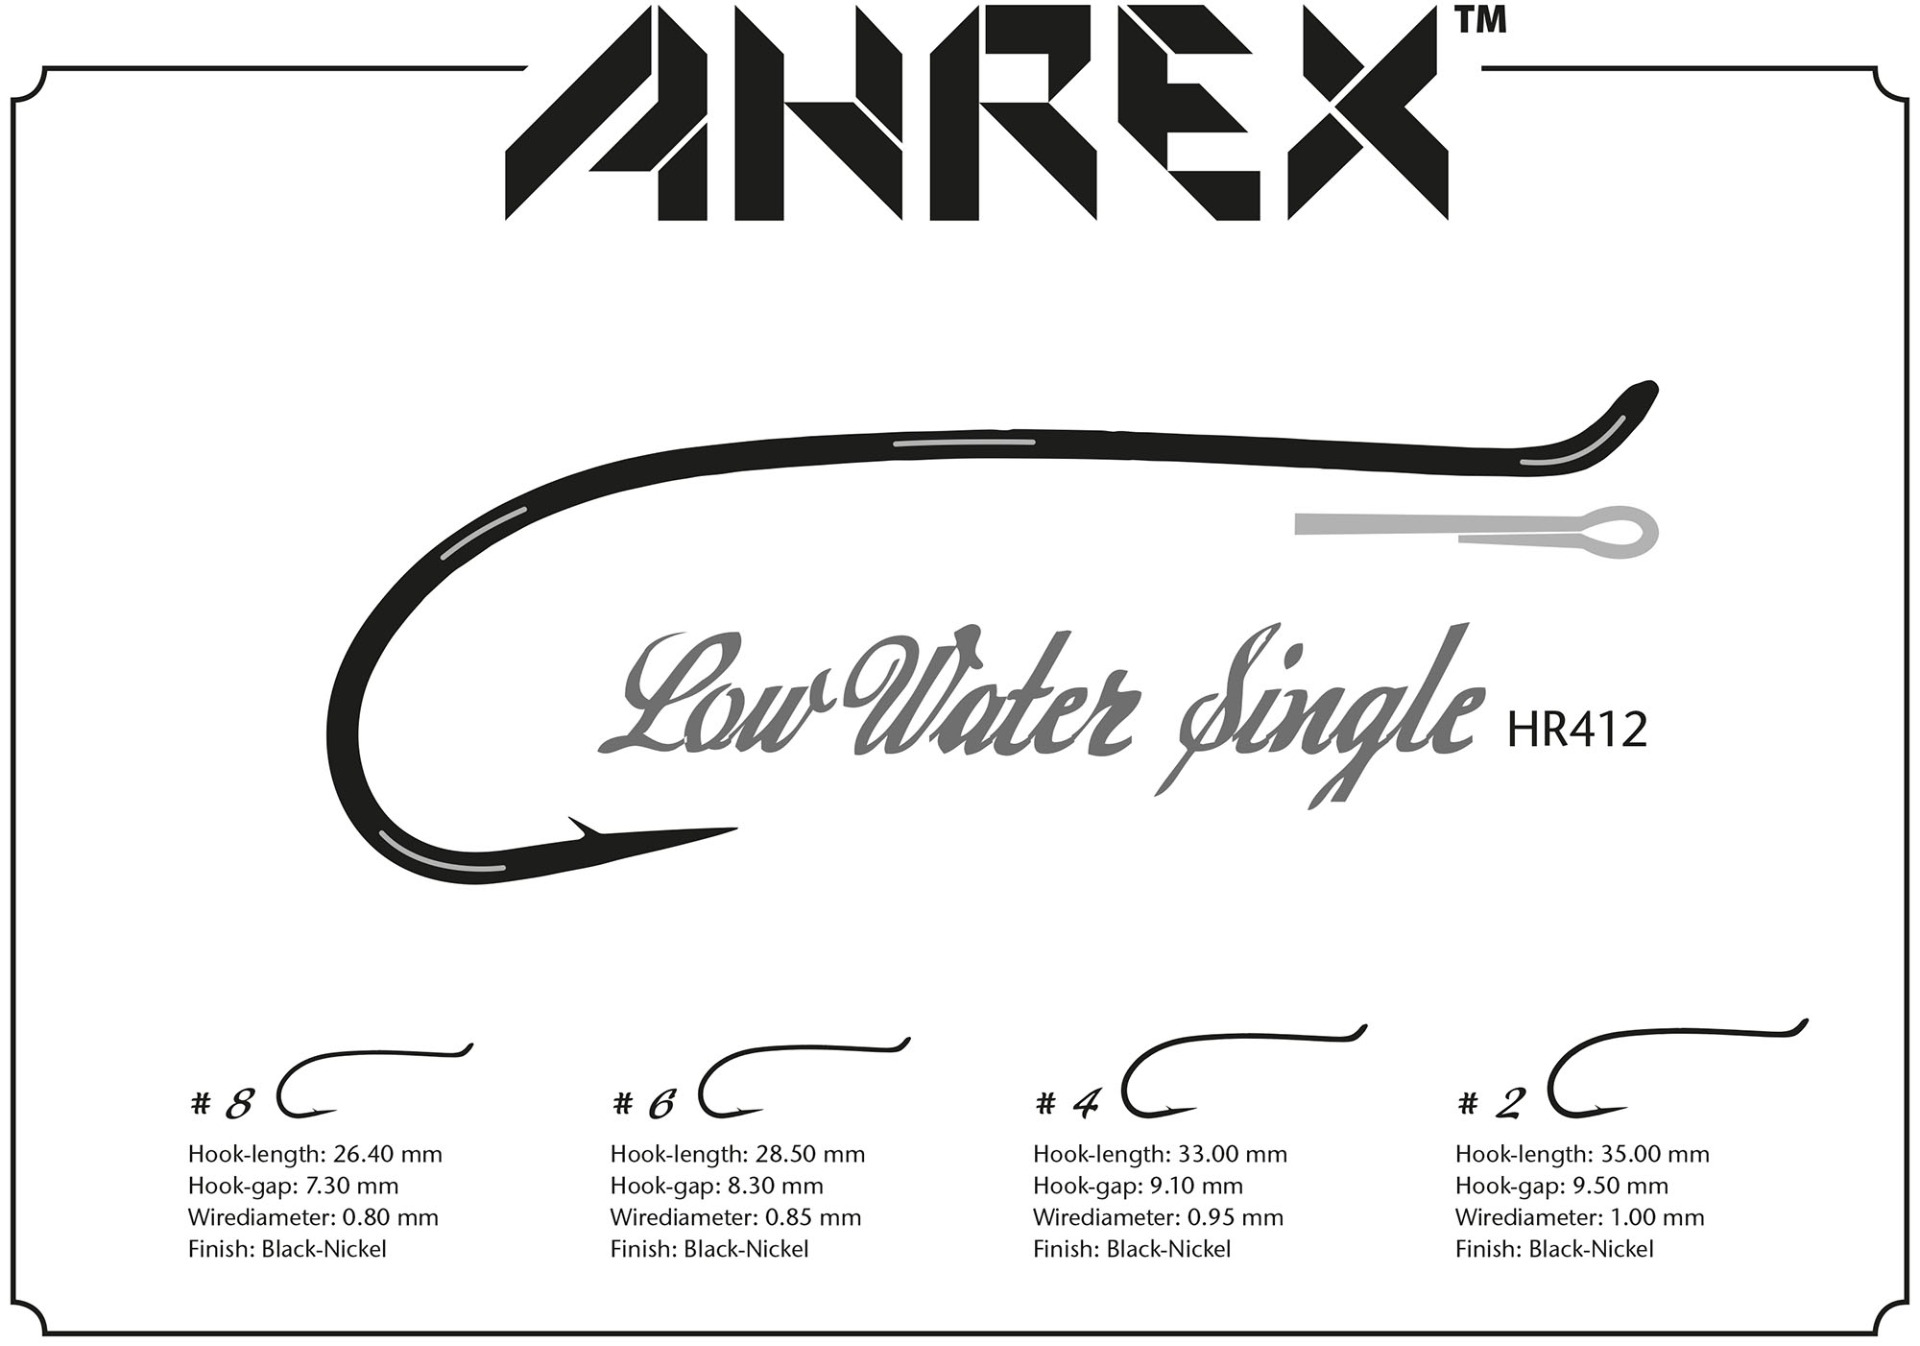 Ahrex Salmon Low Water Single #8